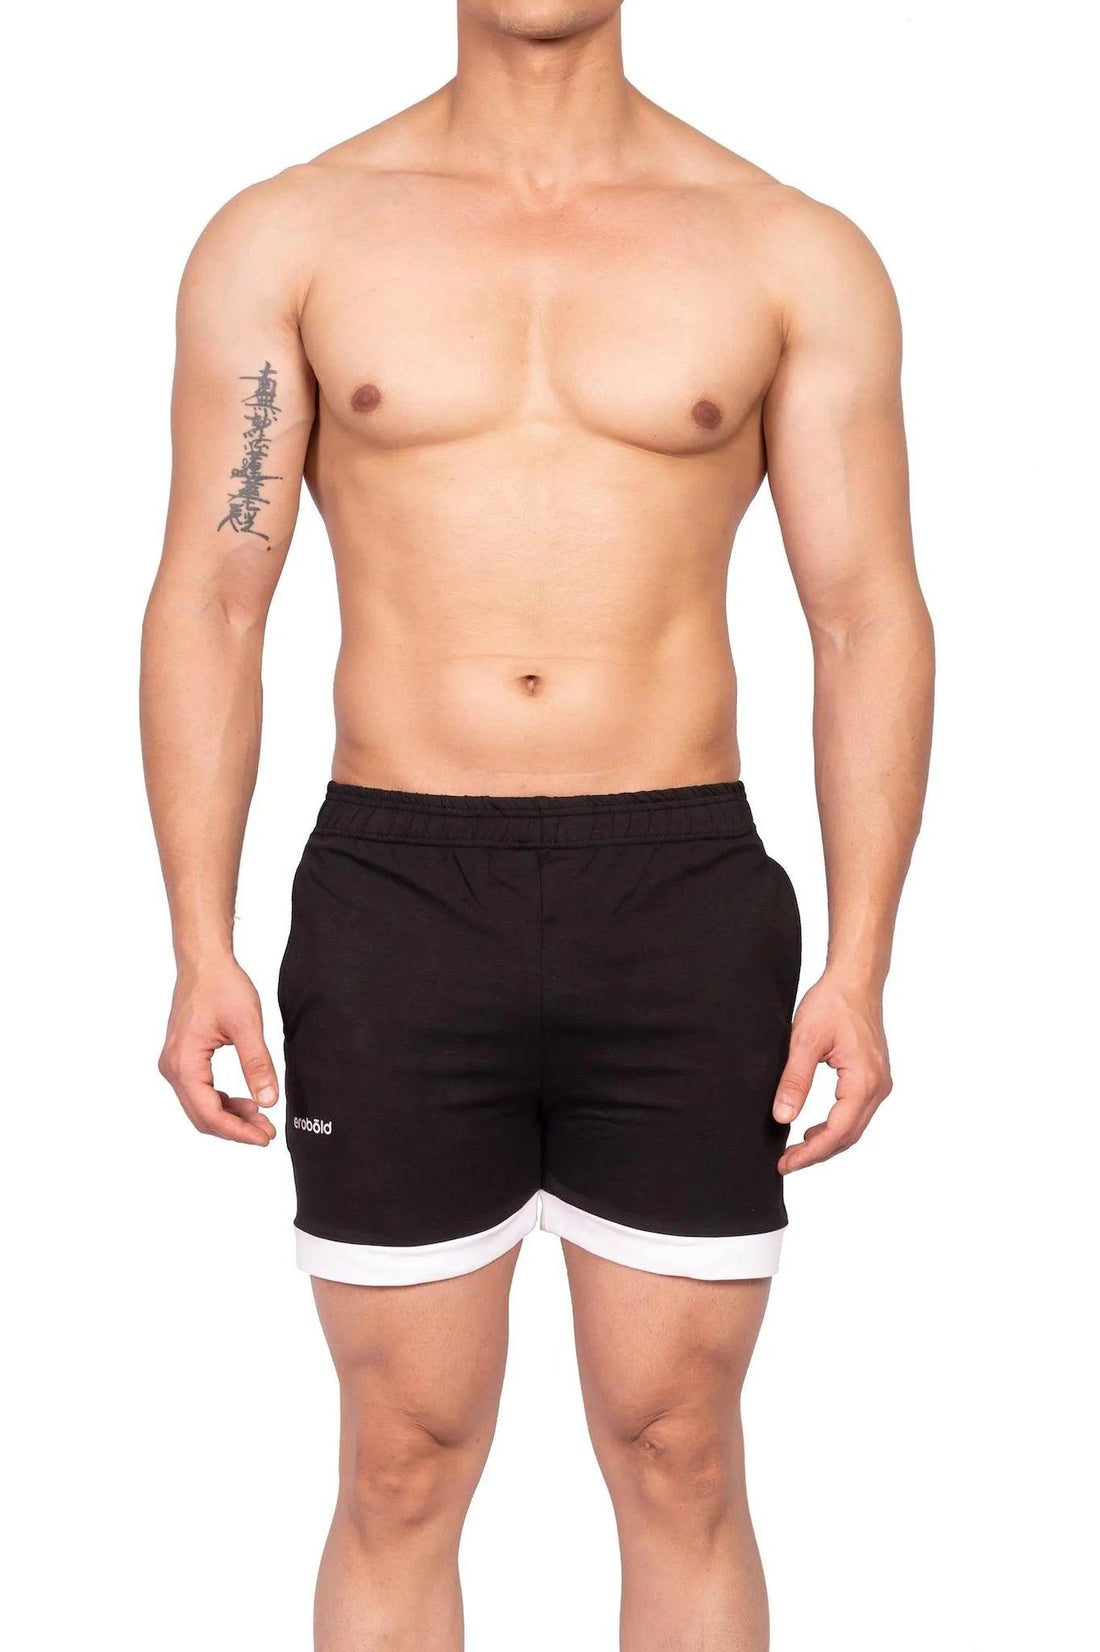 Shorts - Onyx Black Shorts - Black - Erobold - 